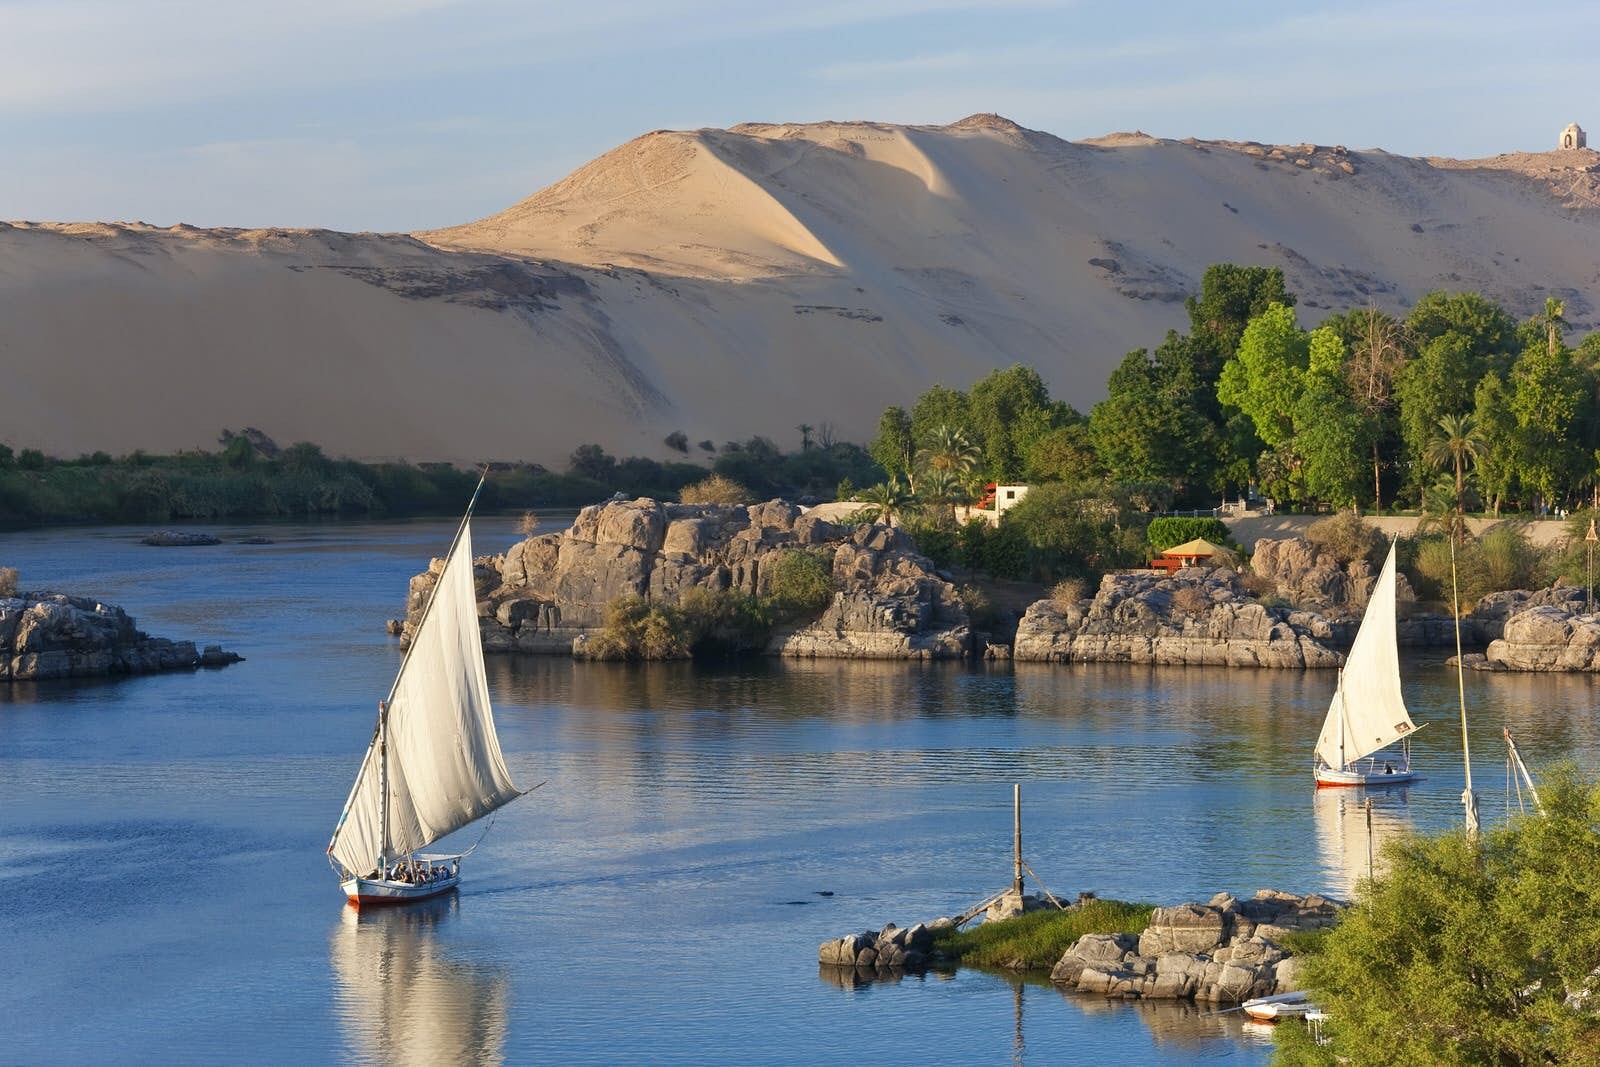 Aswan Felucca ride in The River Nile